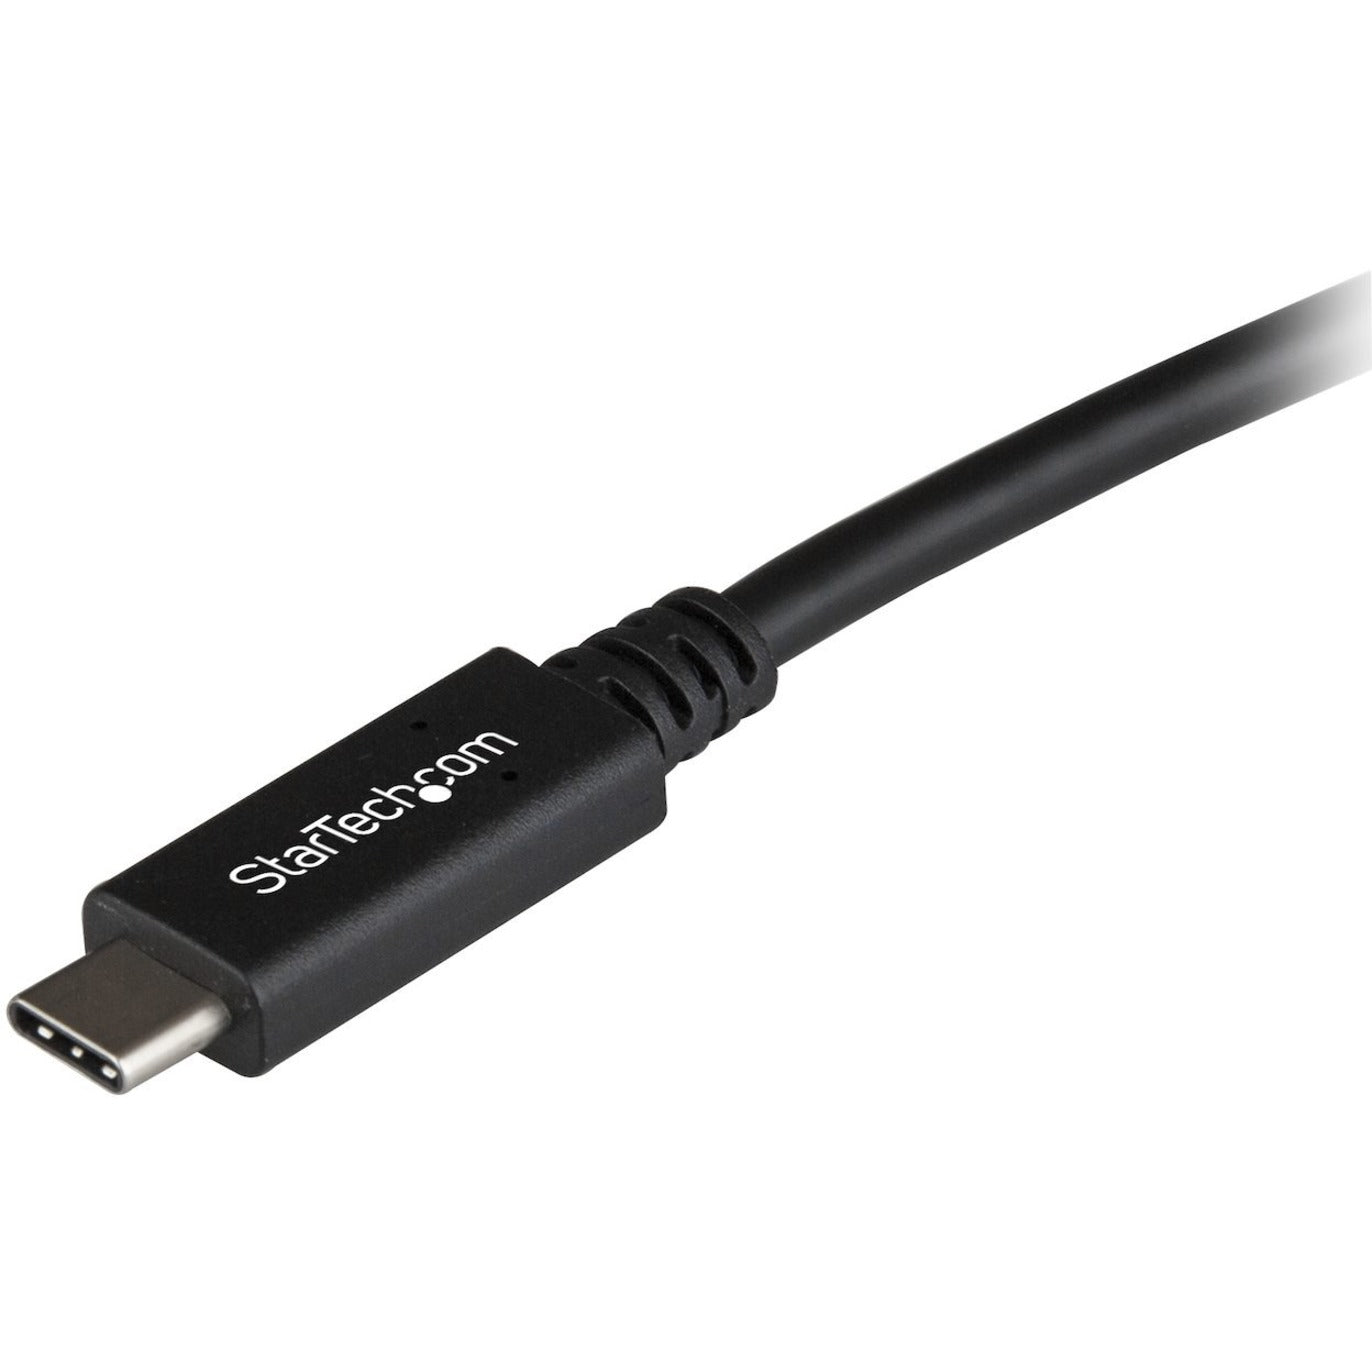 StarTech.com USB31CB1M USB 3.1 USB-C to USB-B Cable - 1m (3ft), 10Gbps Data Transfer Rate, Reversible, Black